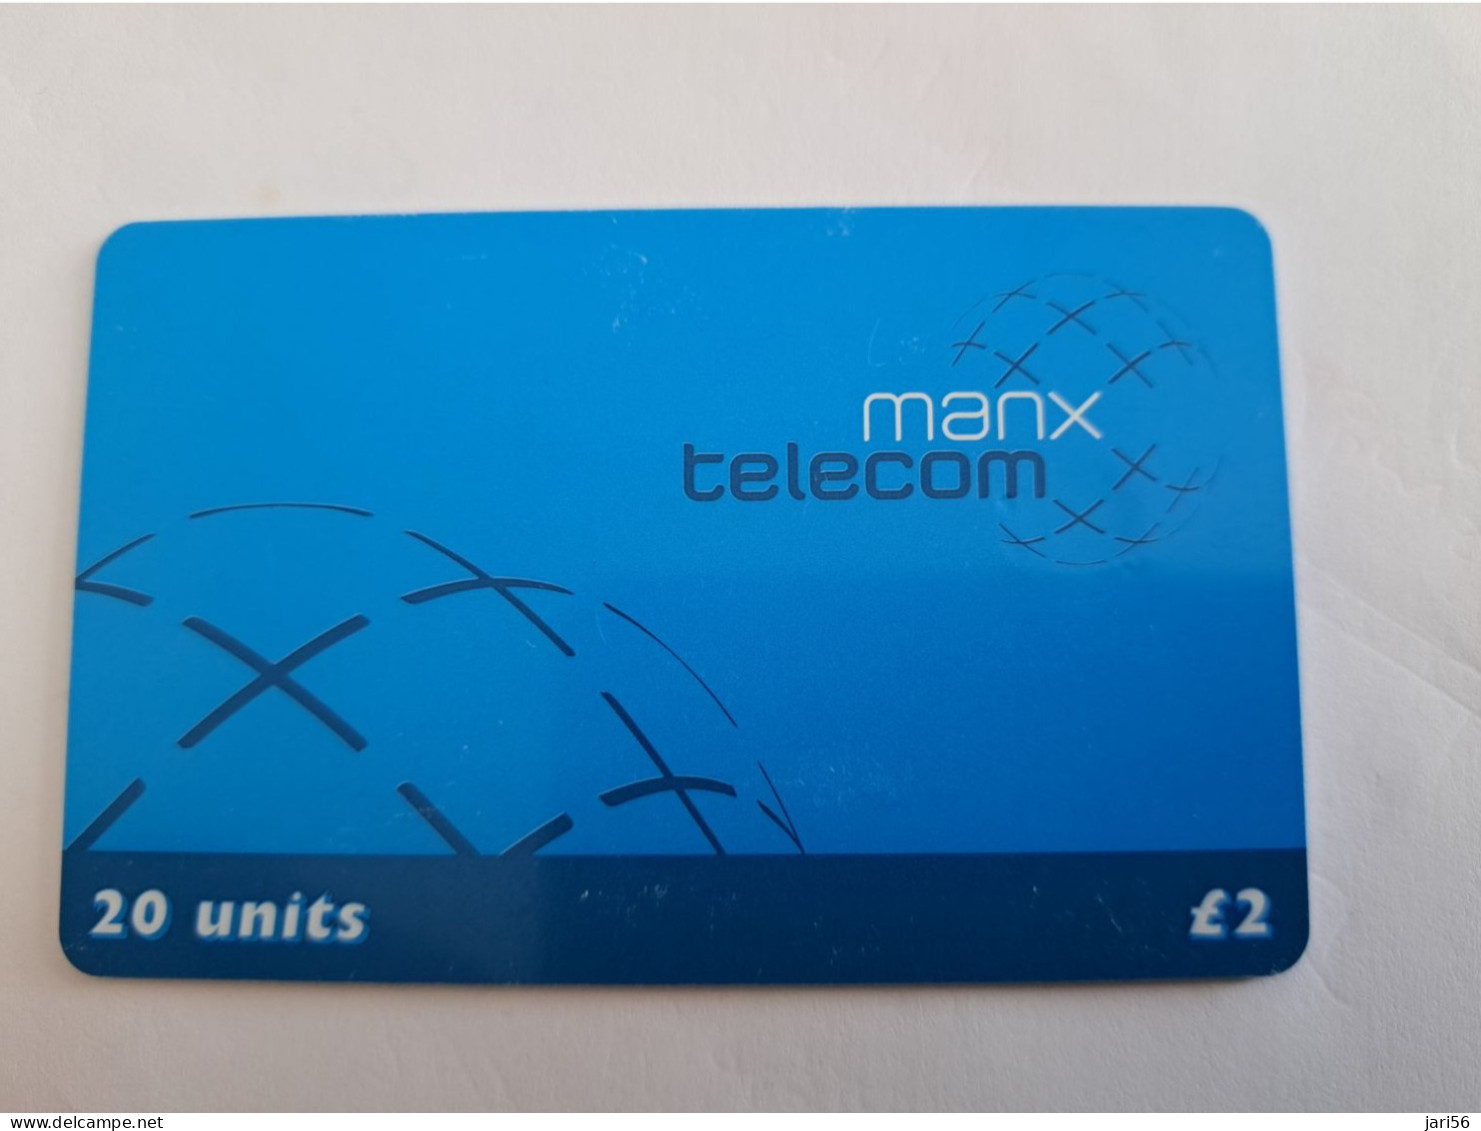 ISLE OF MAN 2 POUND  MANX TELECOM  21 UNITS / MANX TELECOM/ BLUE CARD            CHIP   ** 15104** - Isola Di Man